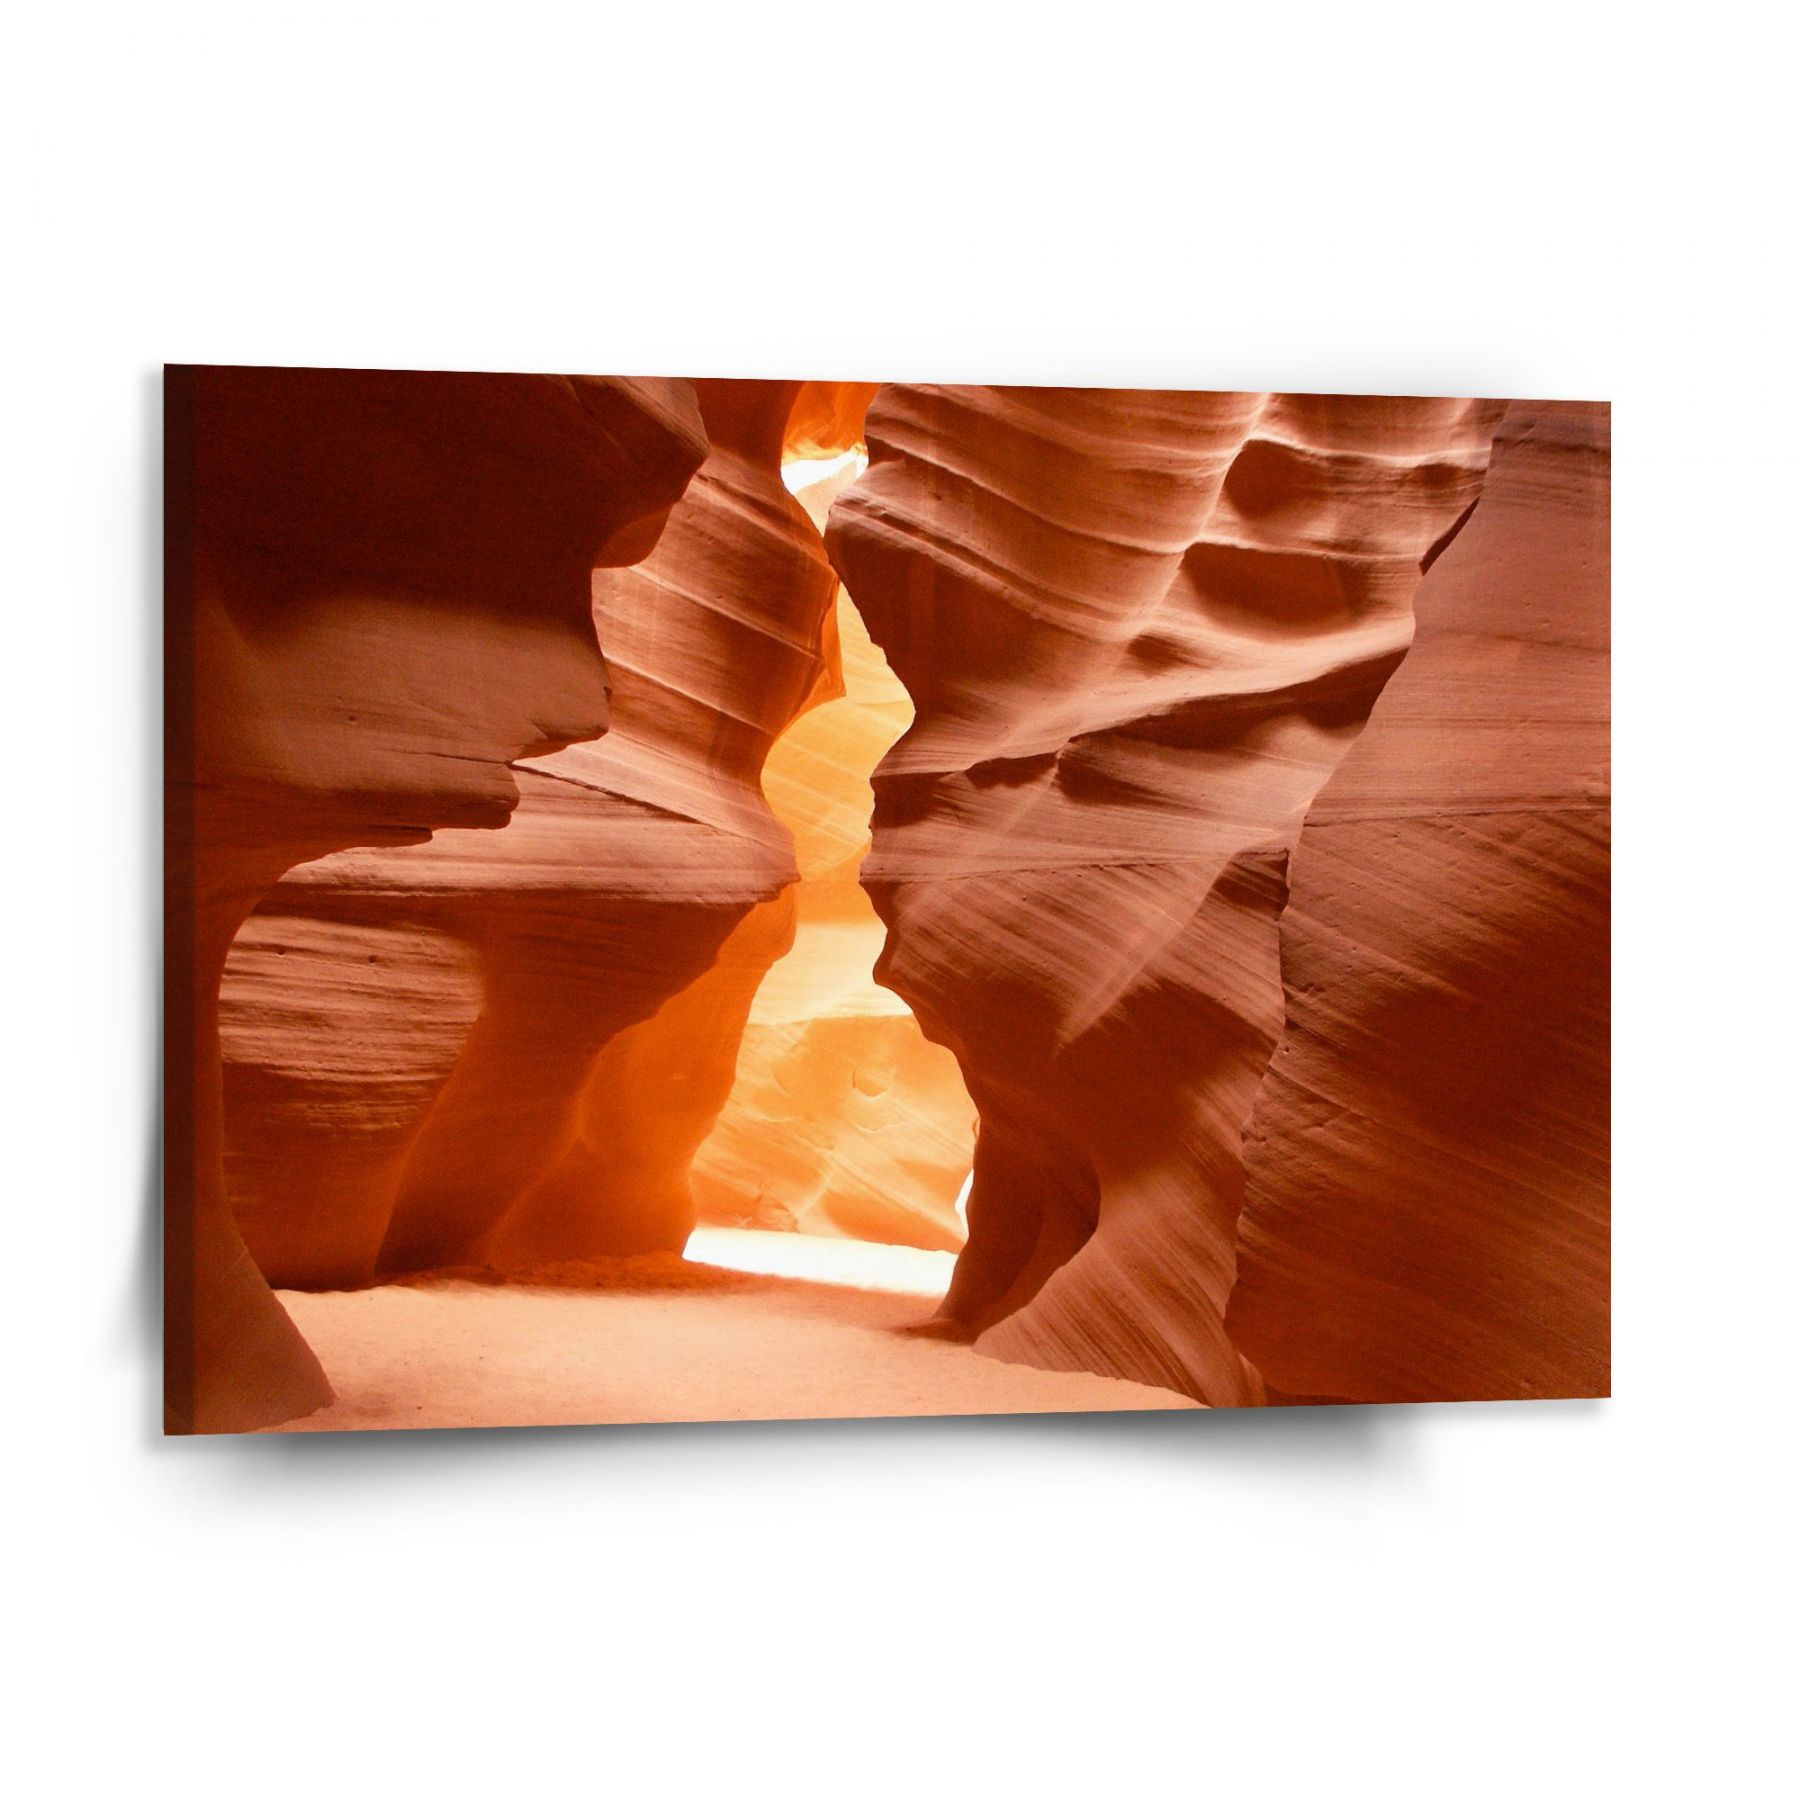 Obraz SABLIO - Skály v poušti 150x110 cm - E-shop Sablo s.r.o.